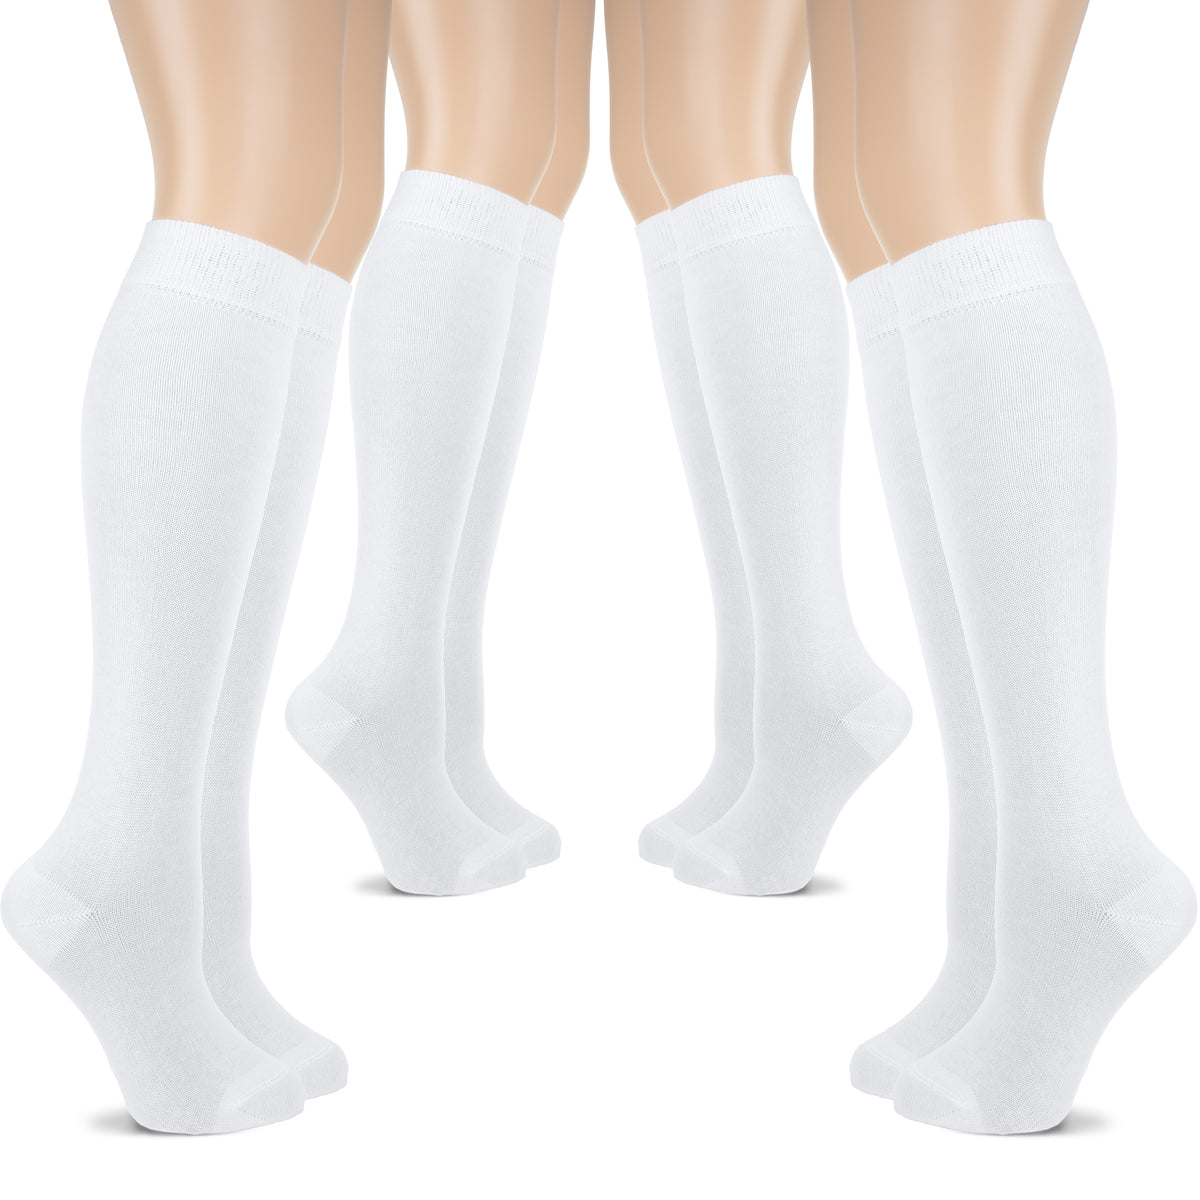 Women's Knee-High Cotton Dress Plain Socks, 4 Pairs